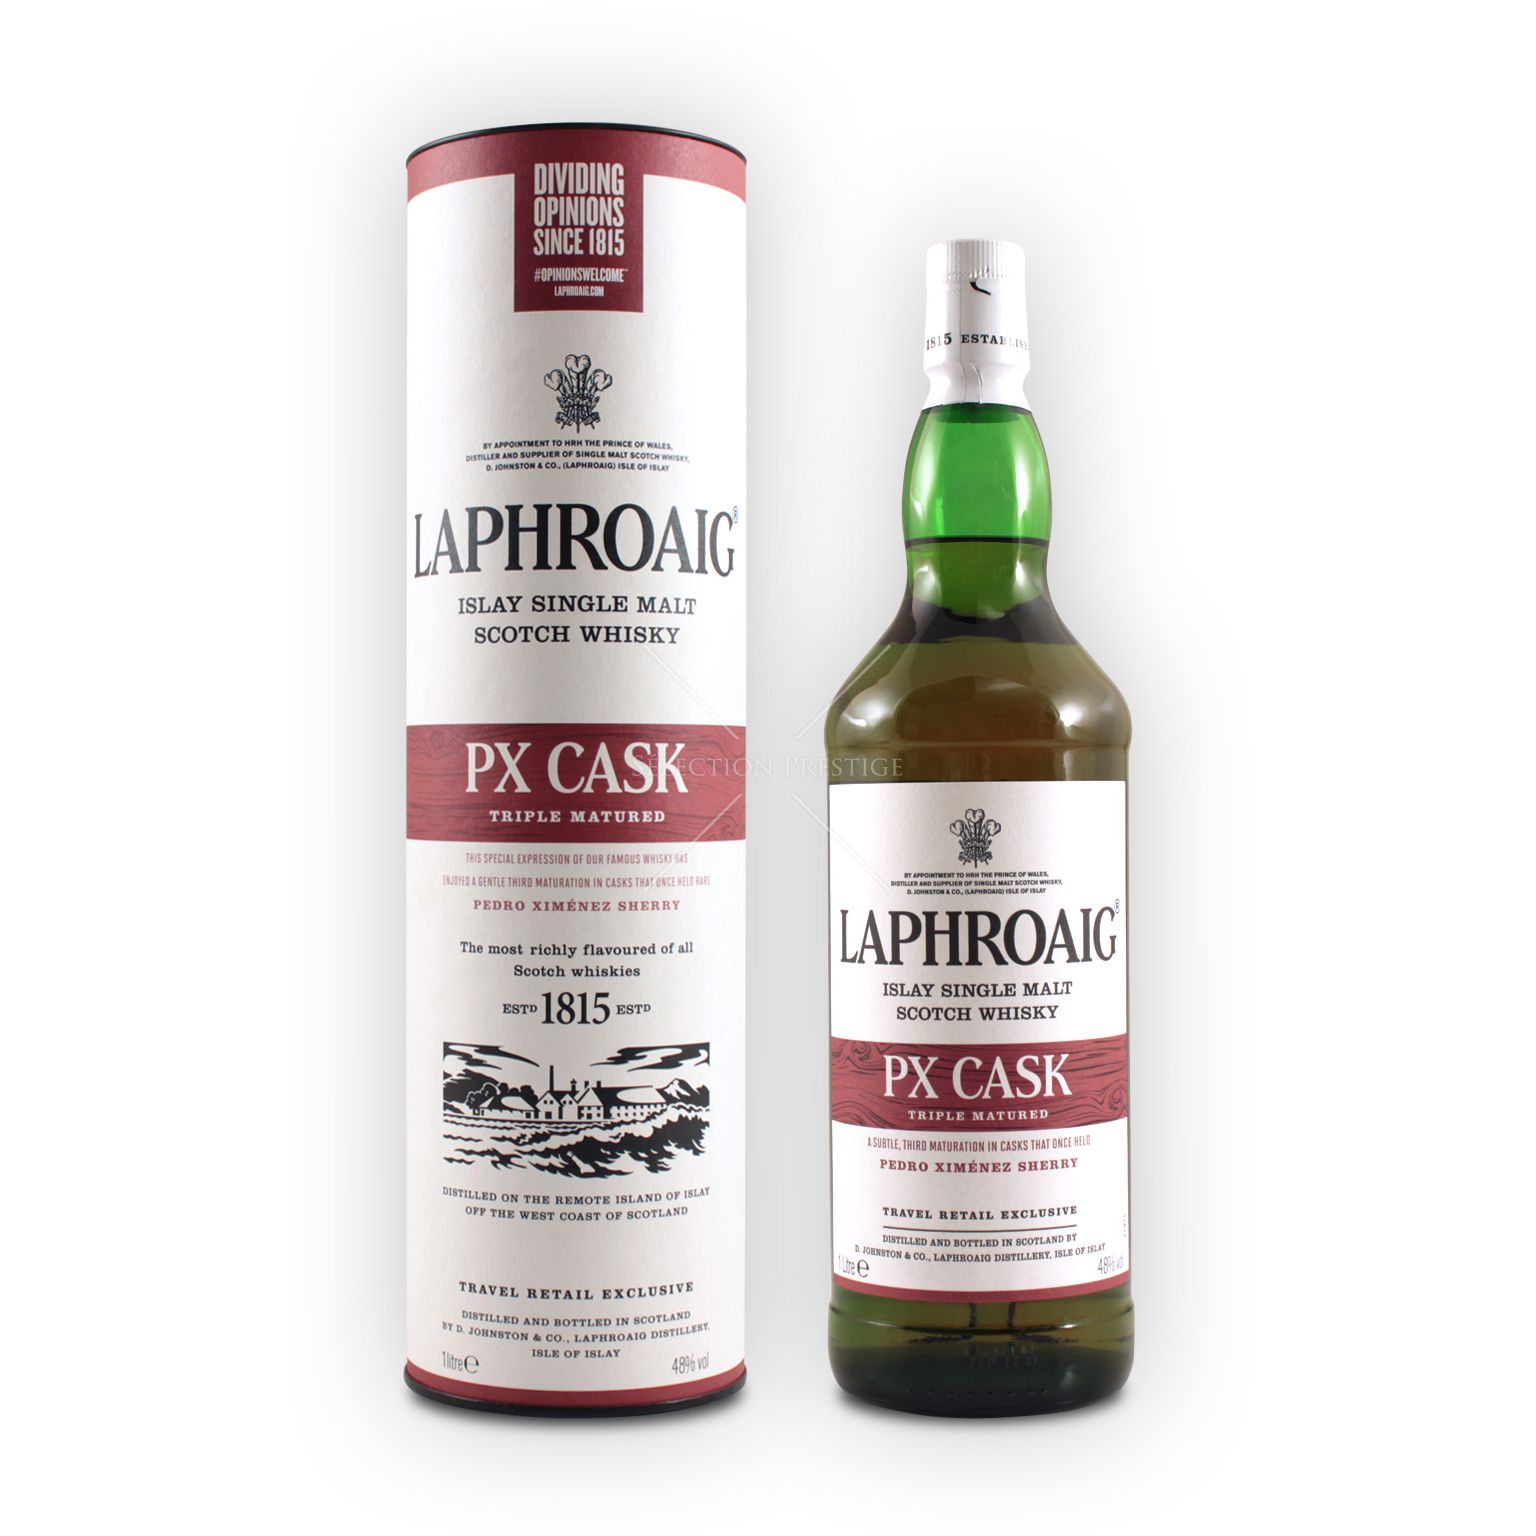 102299_laphroaig_px-cask-scotch-whisky_1000